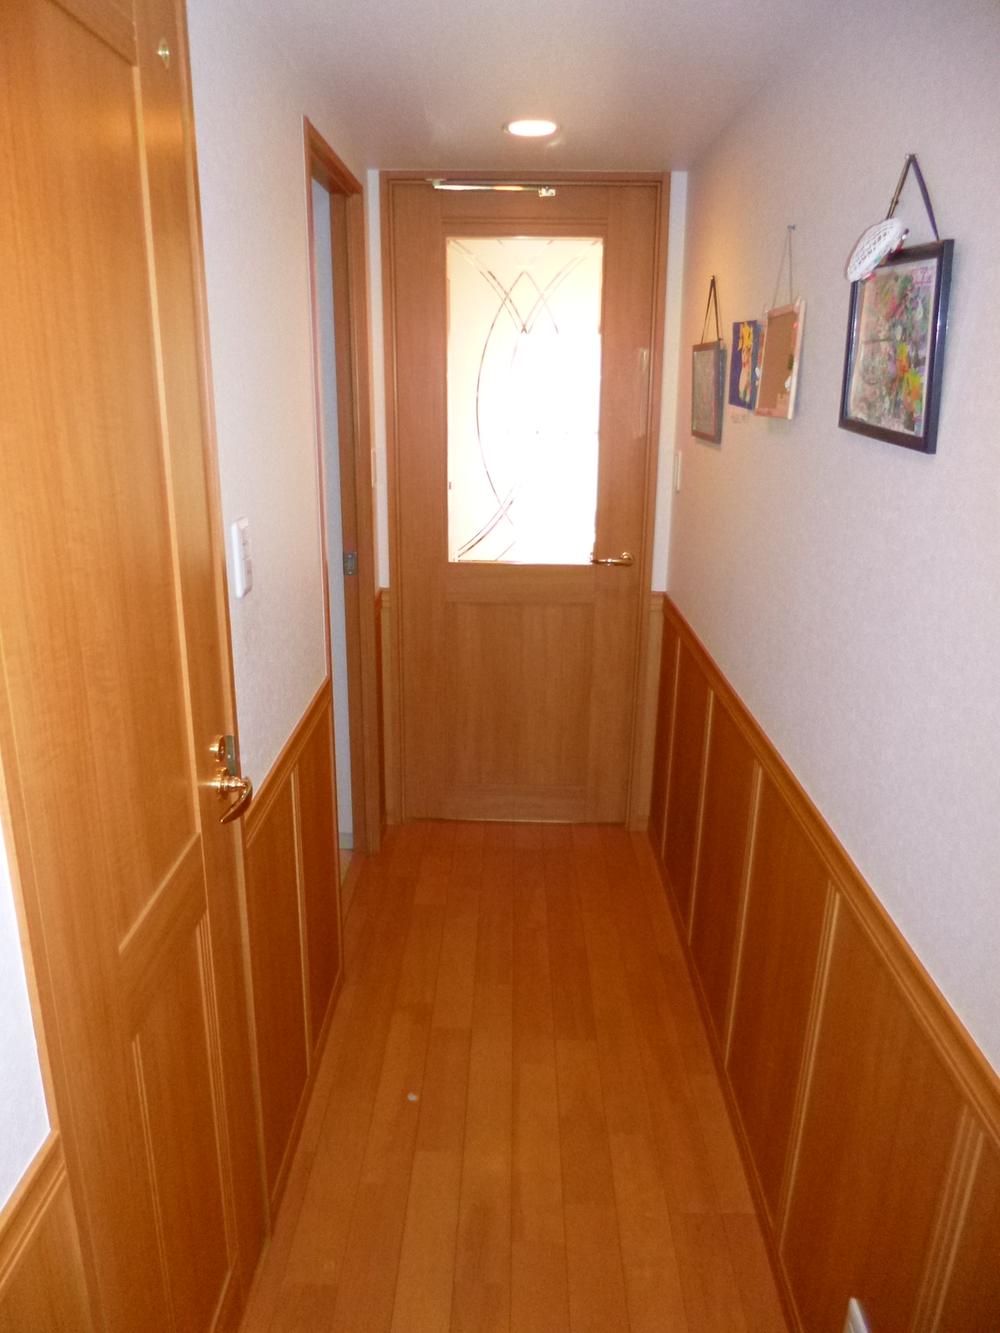 Other introspection. Indoor (12 May 2013) Shooting Corridor has classy wooden waist wall!